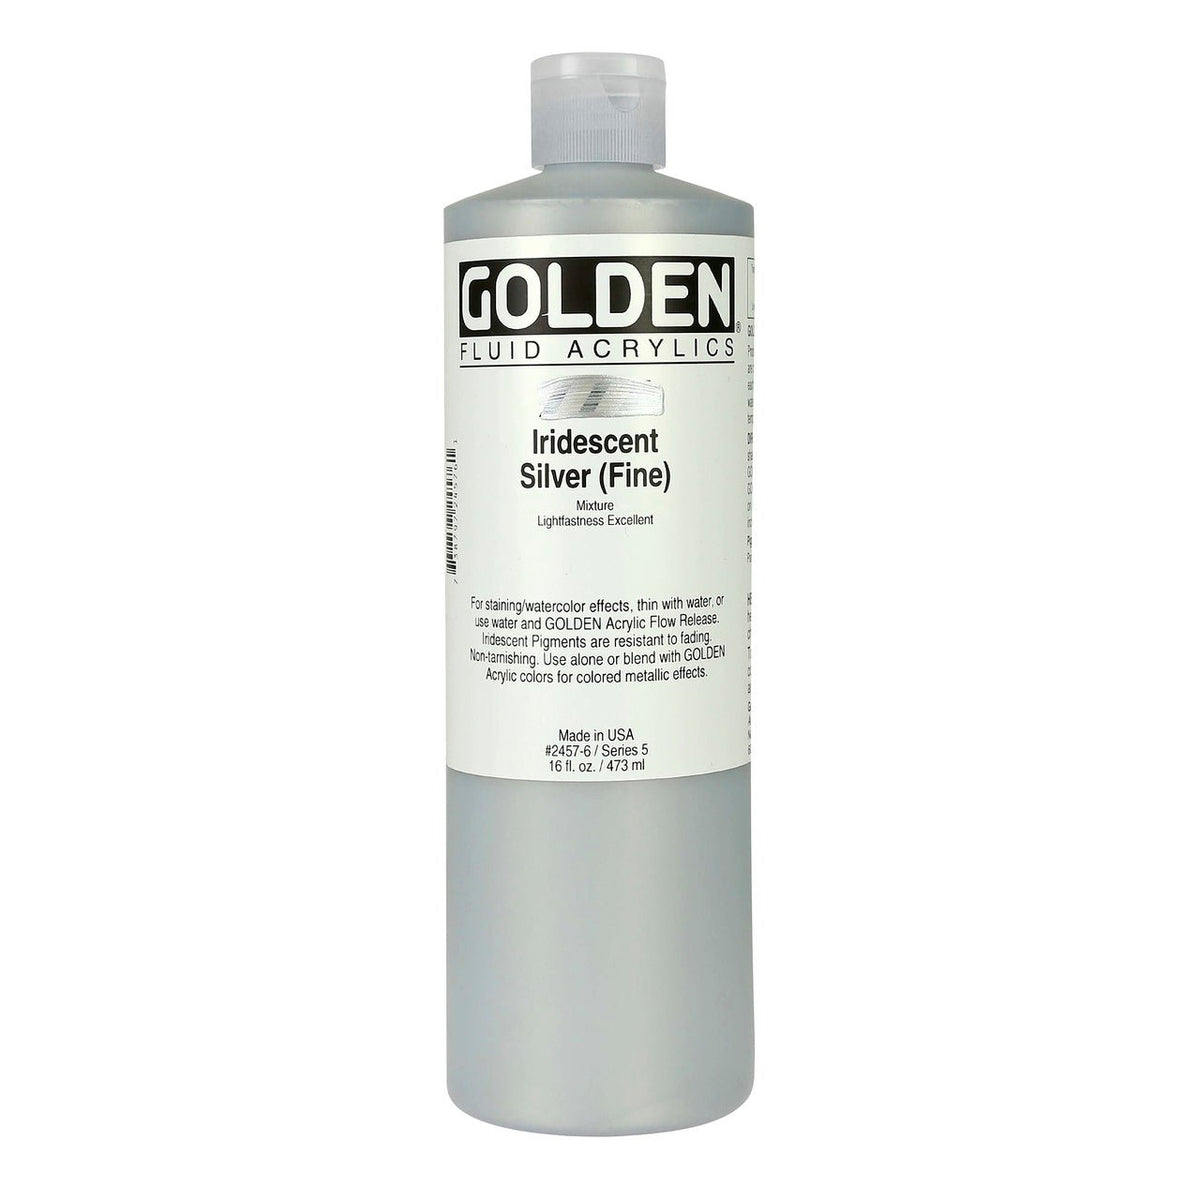 Golden Fluid Acrylic Iridescent Silver (fine) 16 oz - merriartist.com